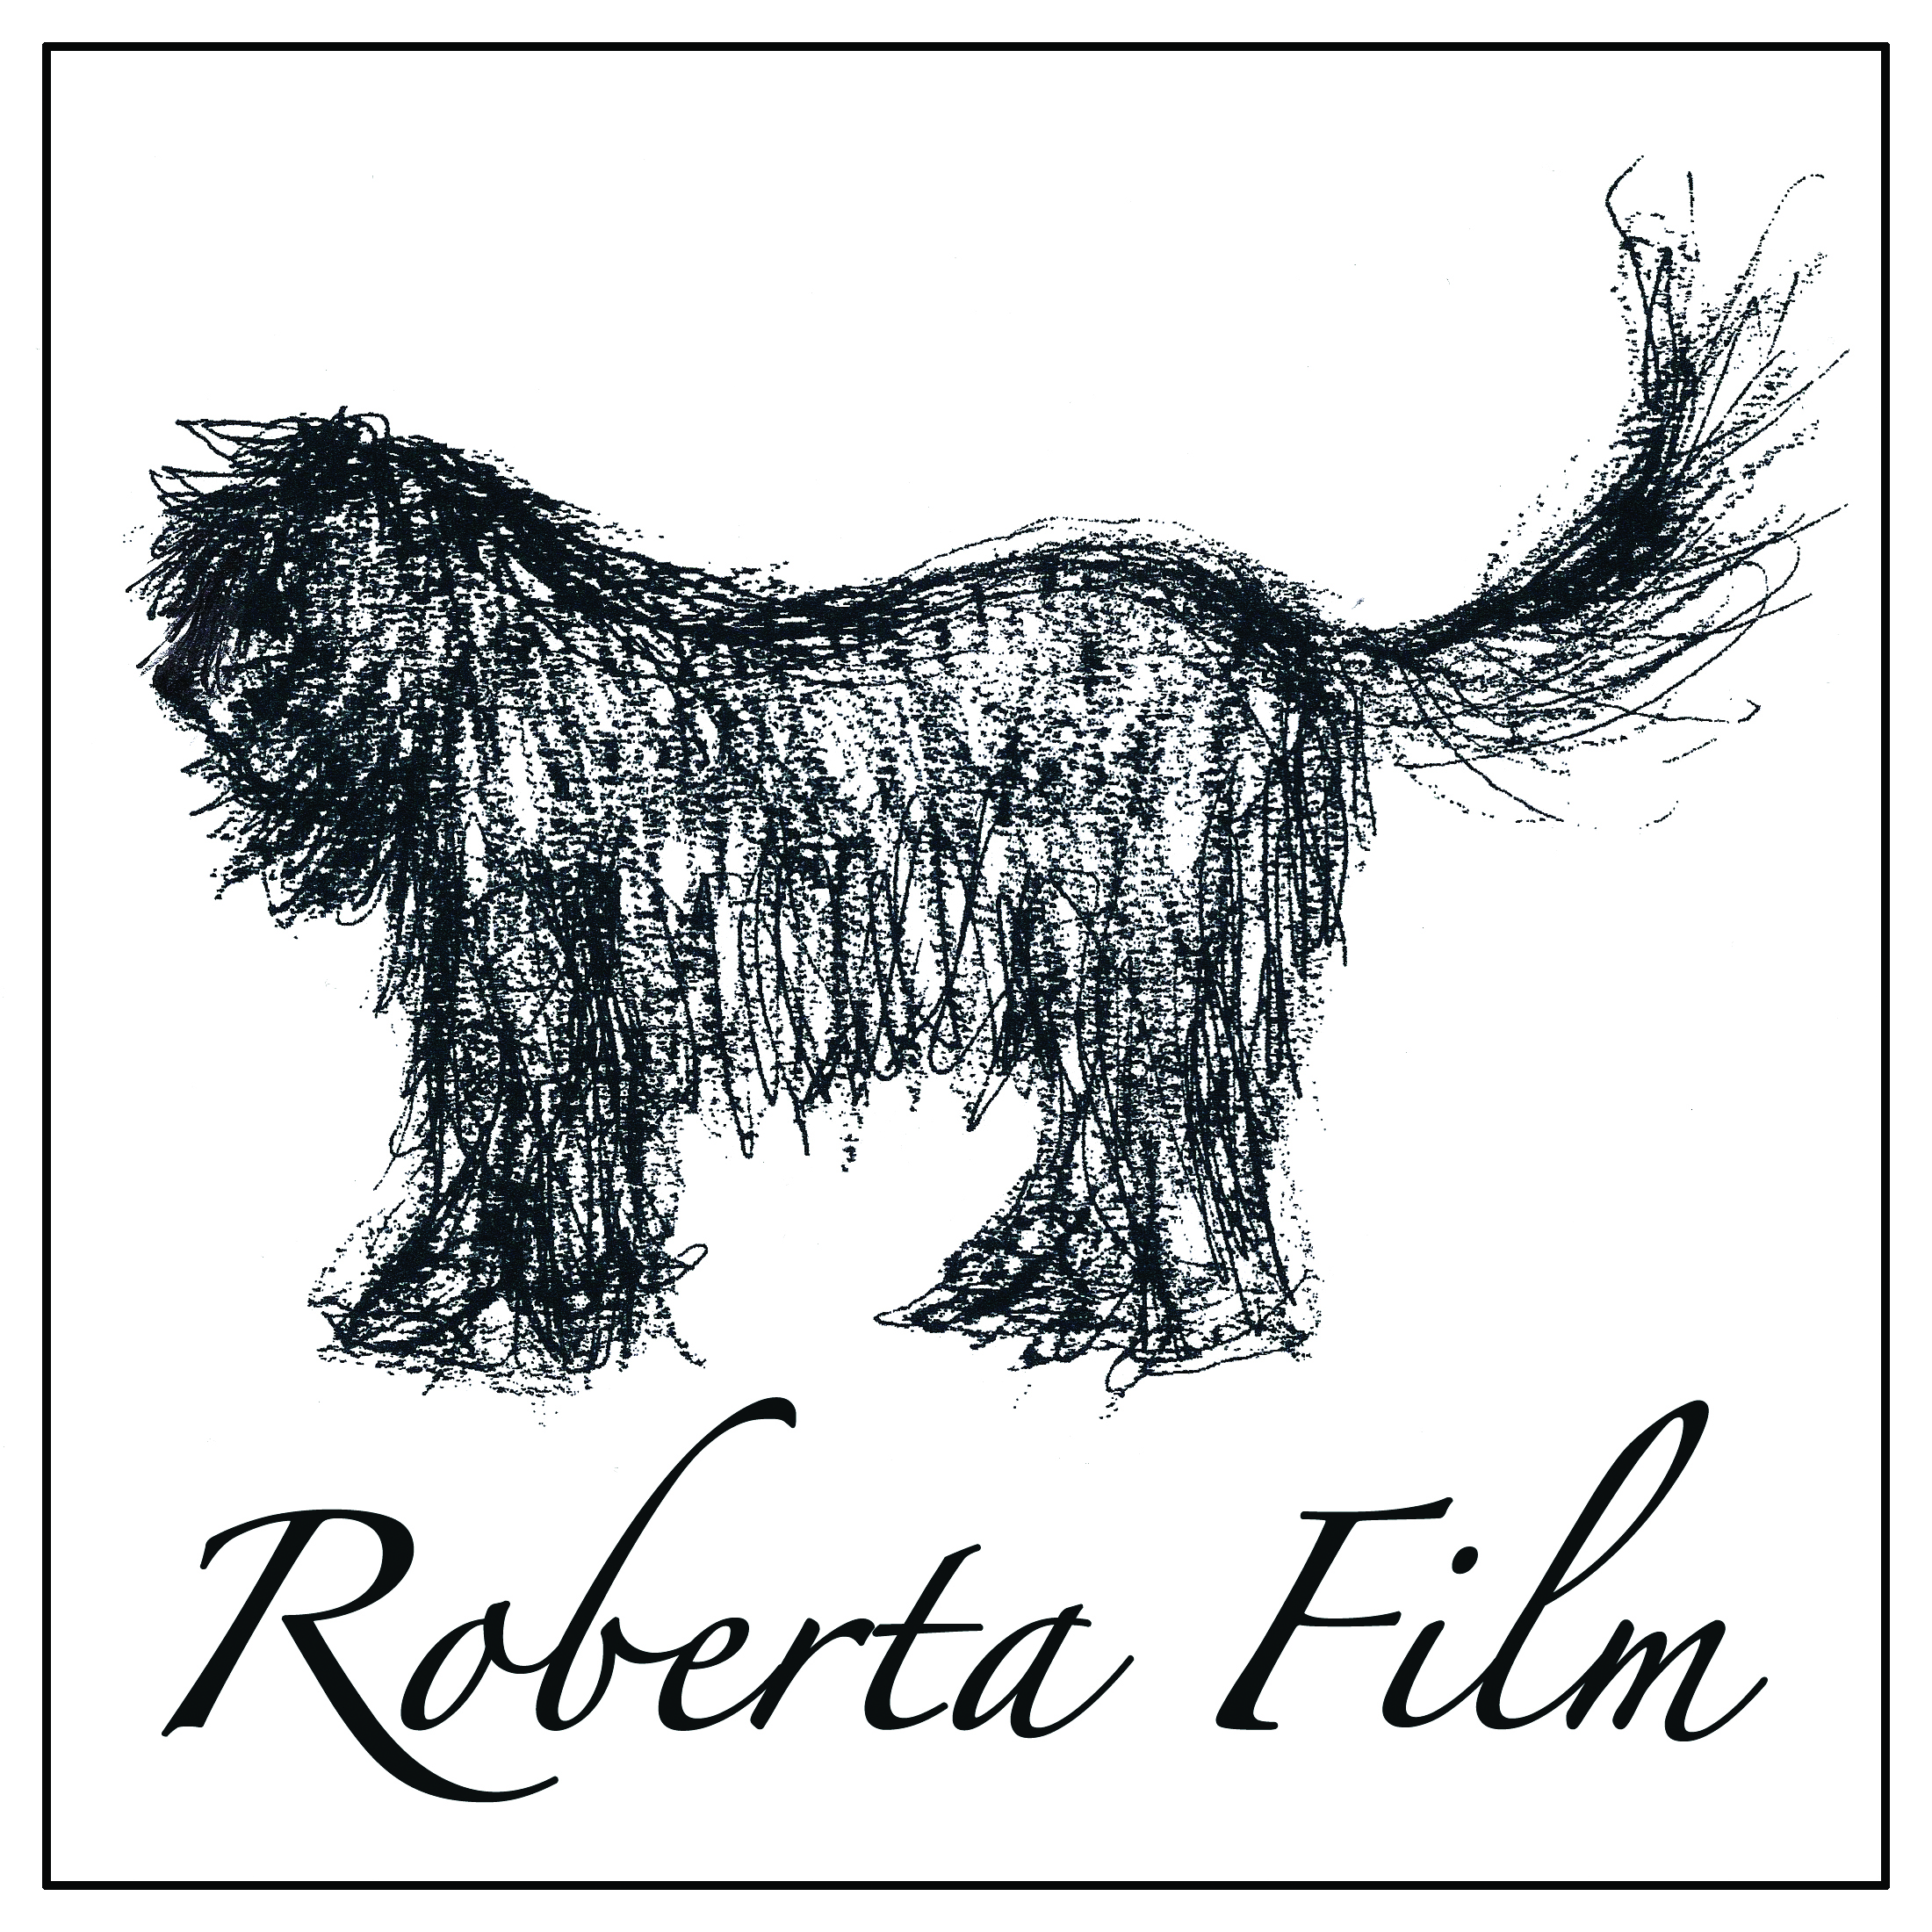 Roberta film logo.jpg